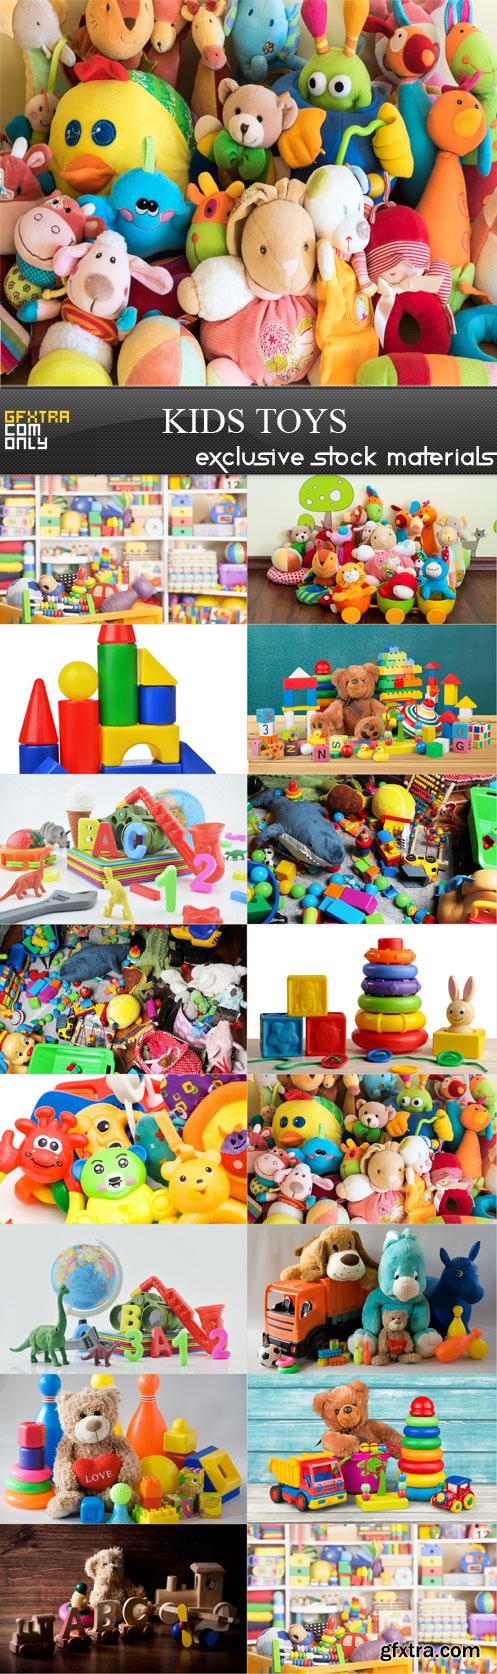 Kids toys - 15 JPEG